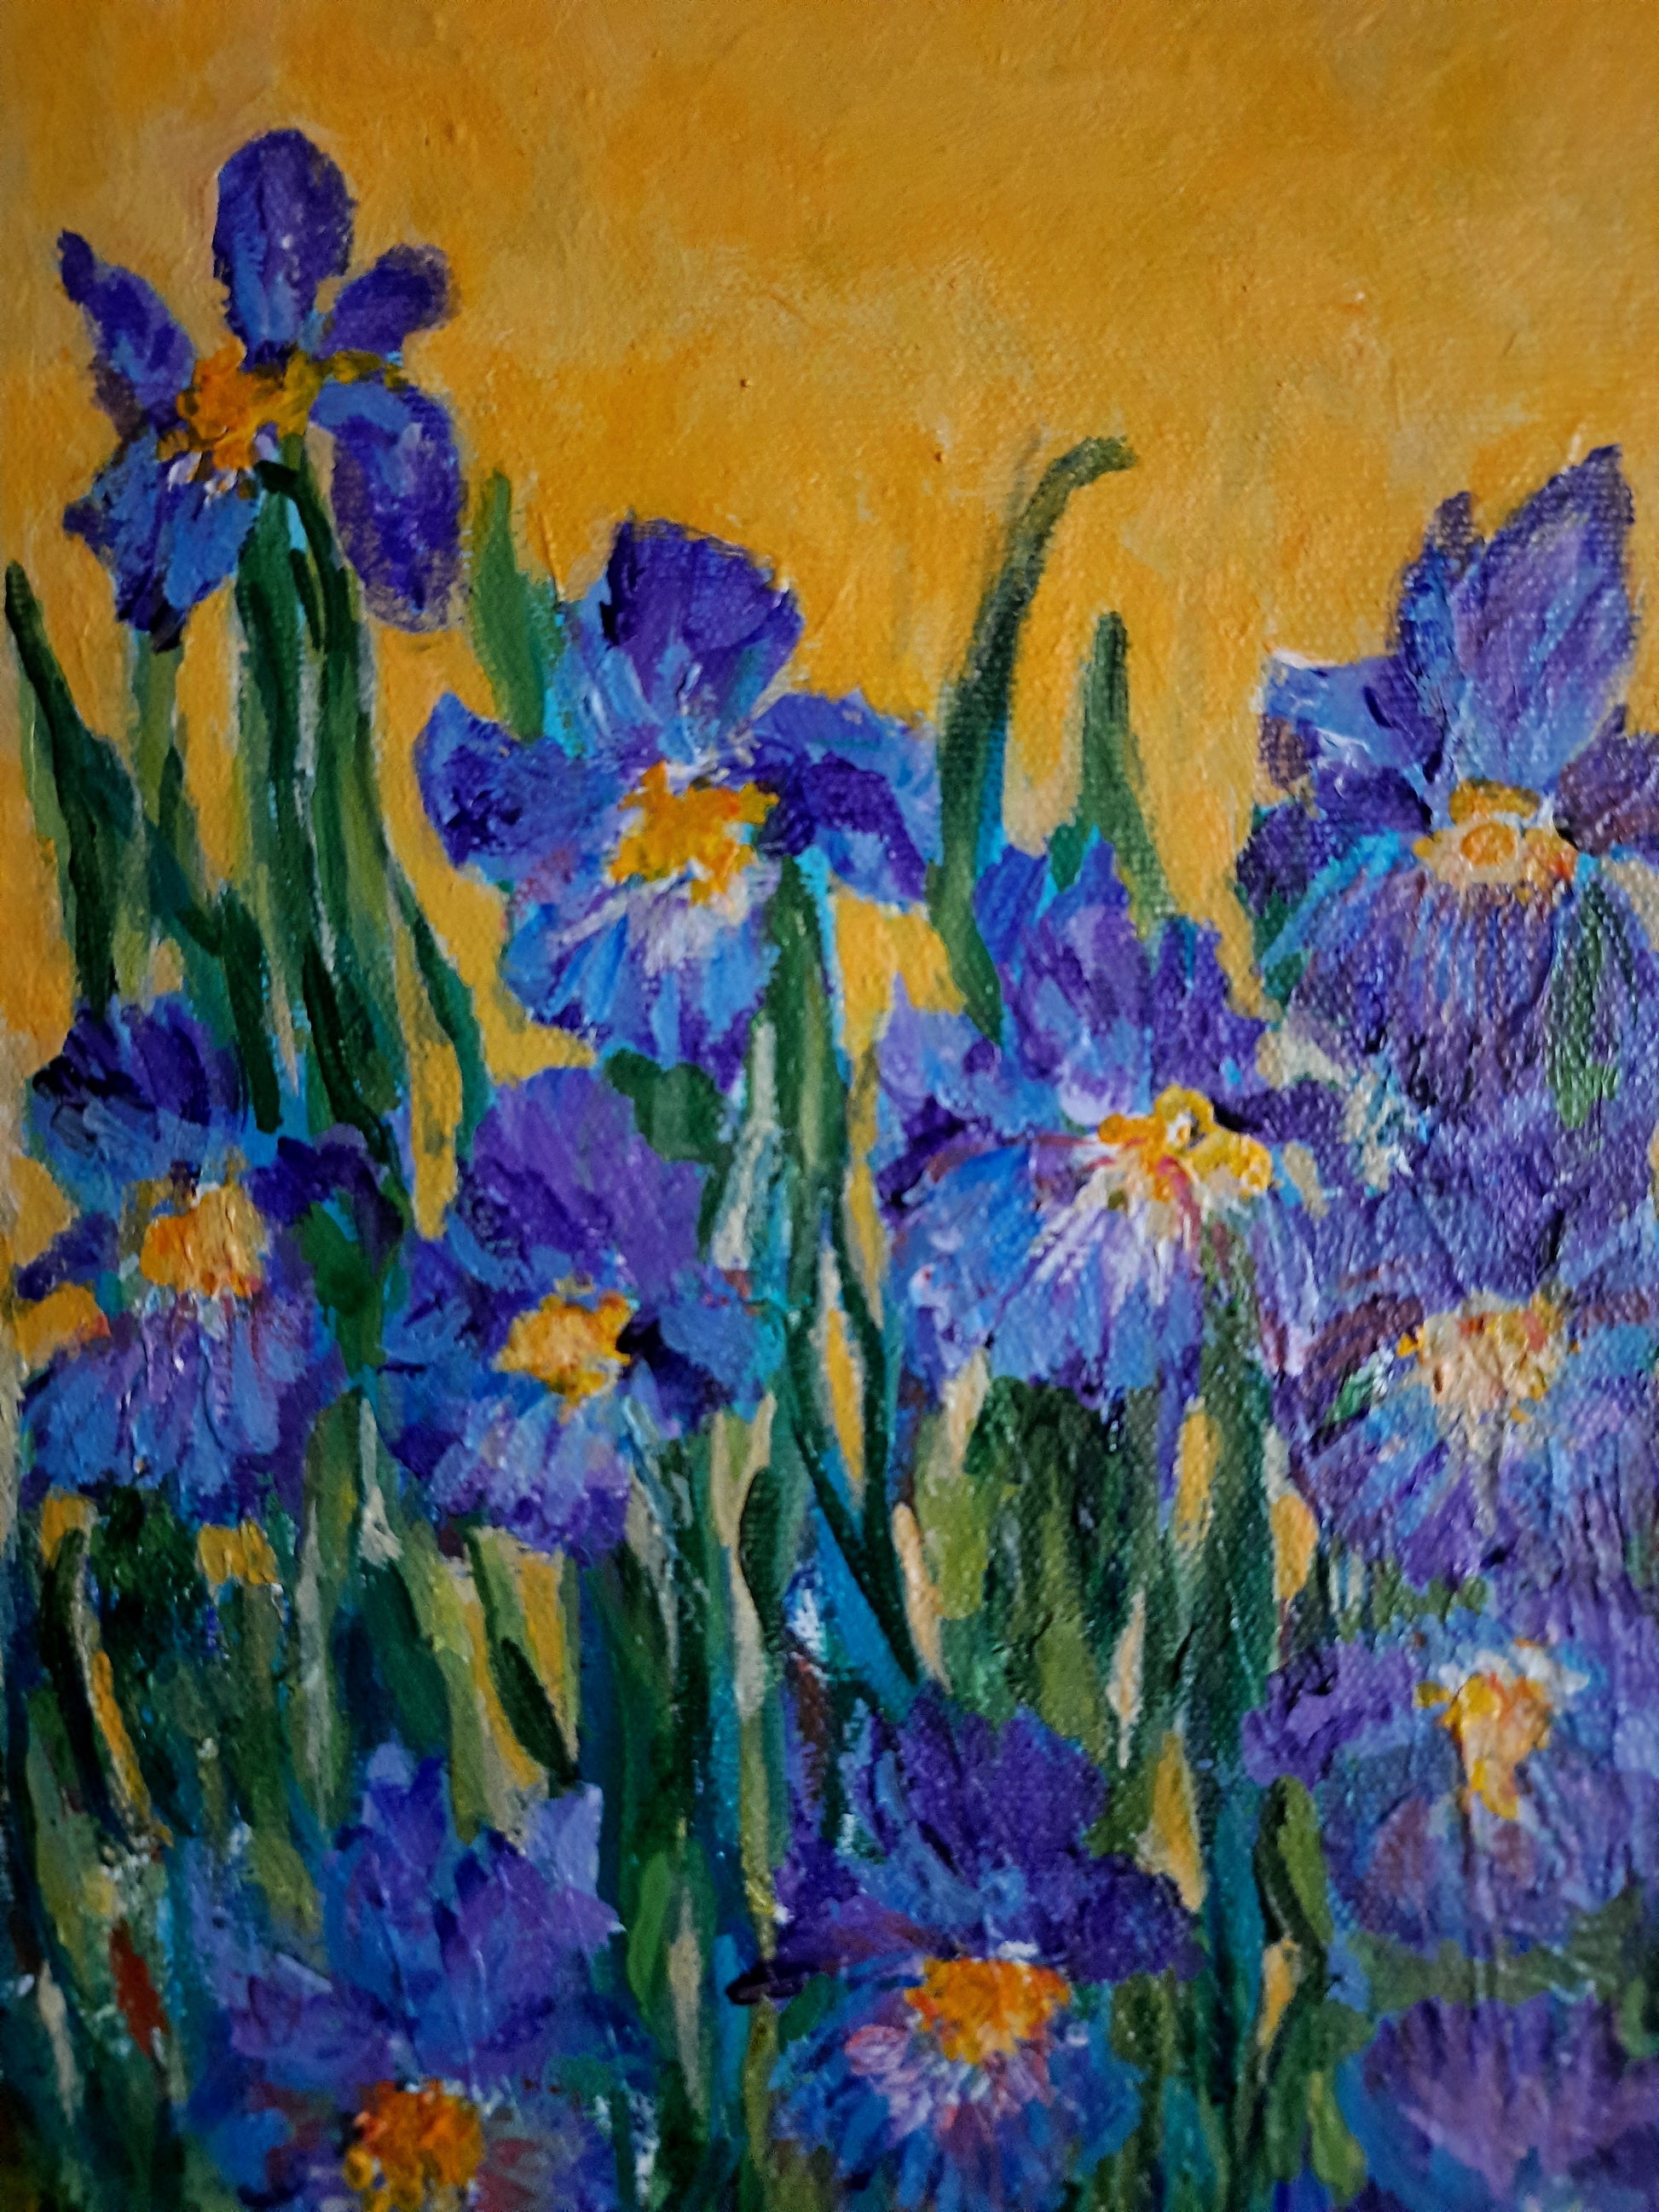 closeup view Garden iris flowers, acrylic painting on canvas panel